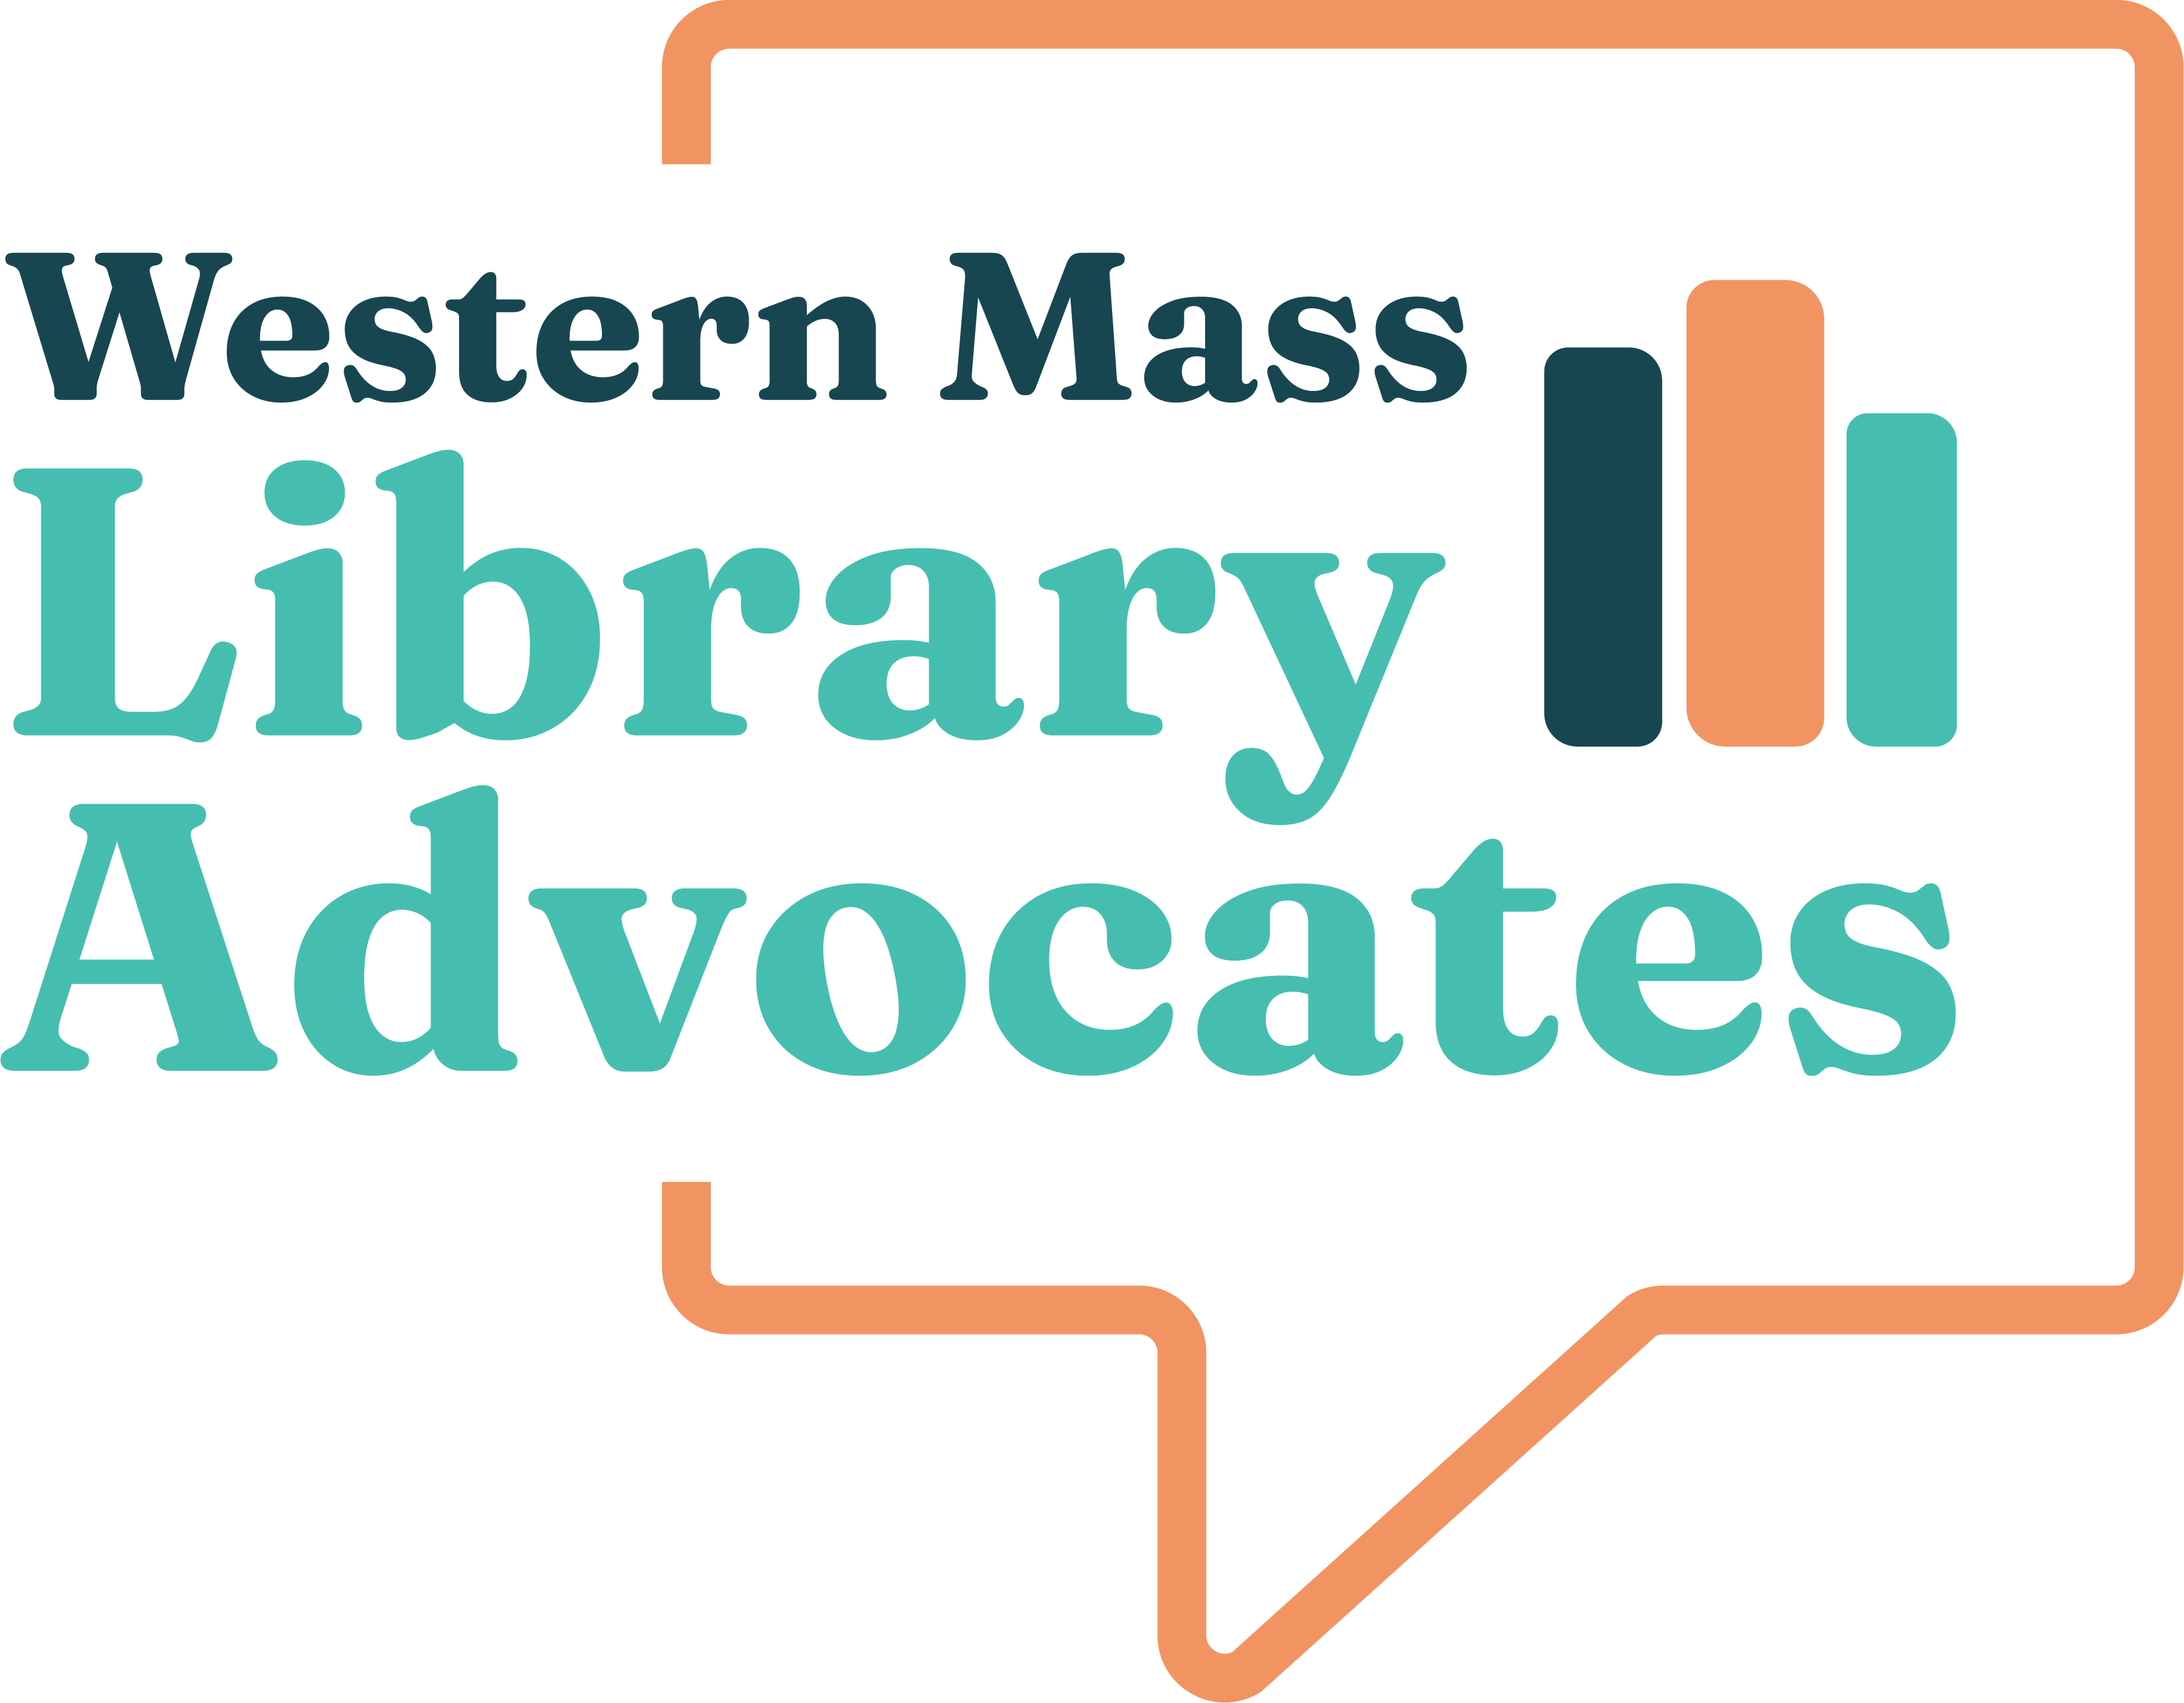 Western Mass Library Advocates